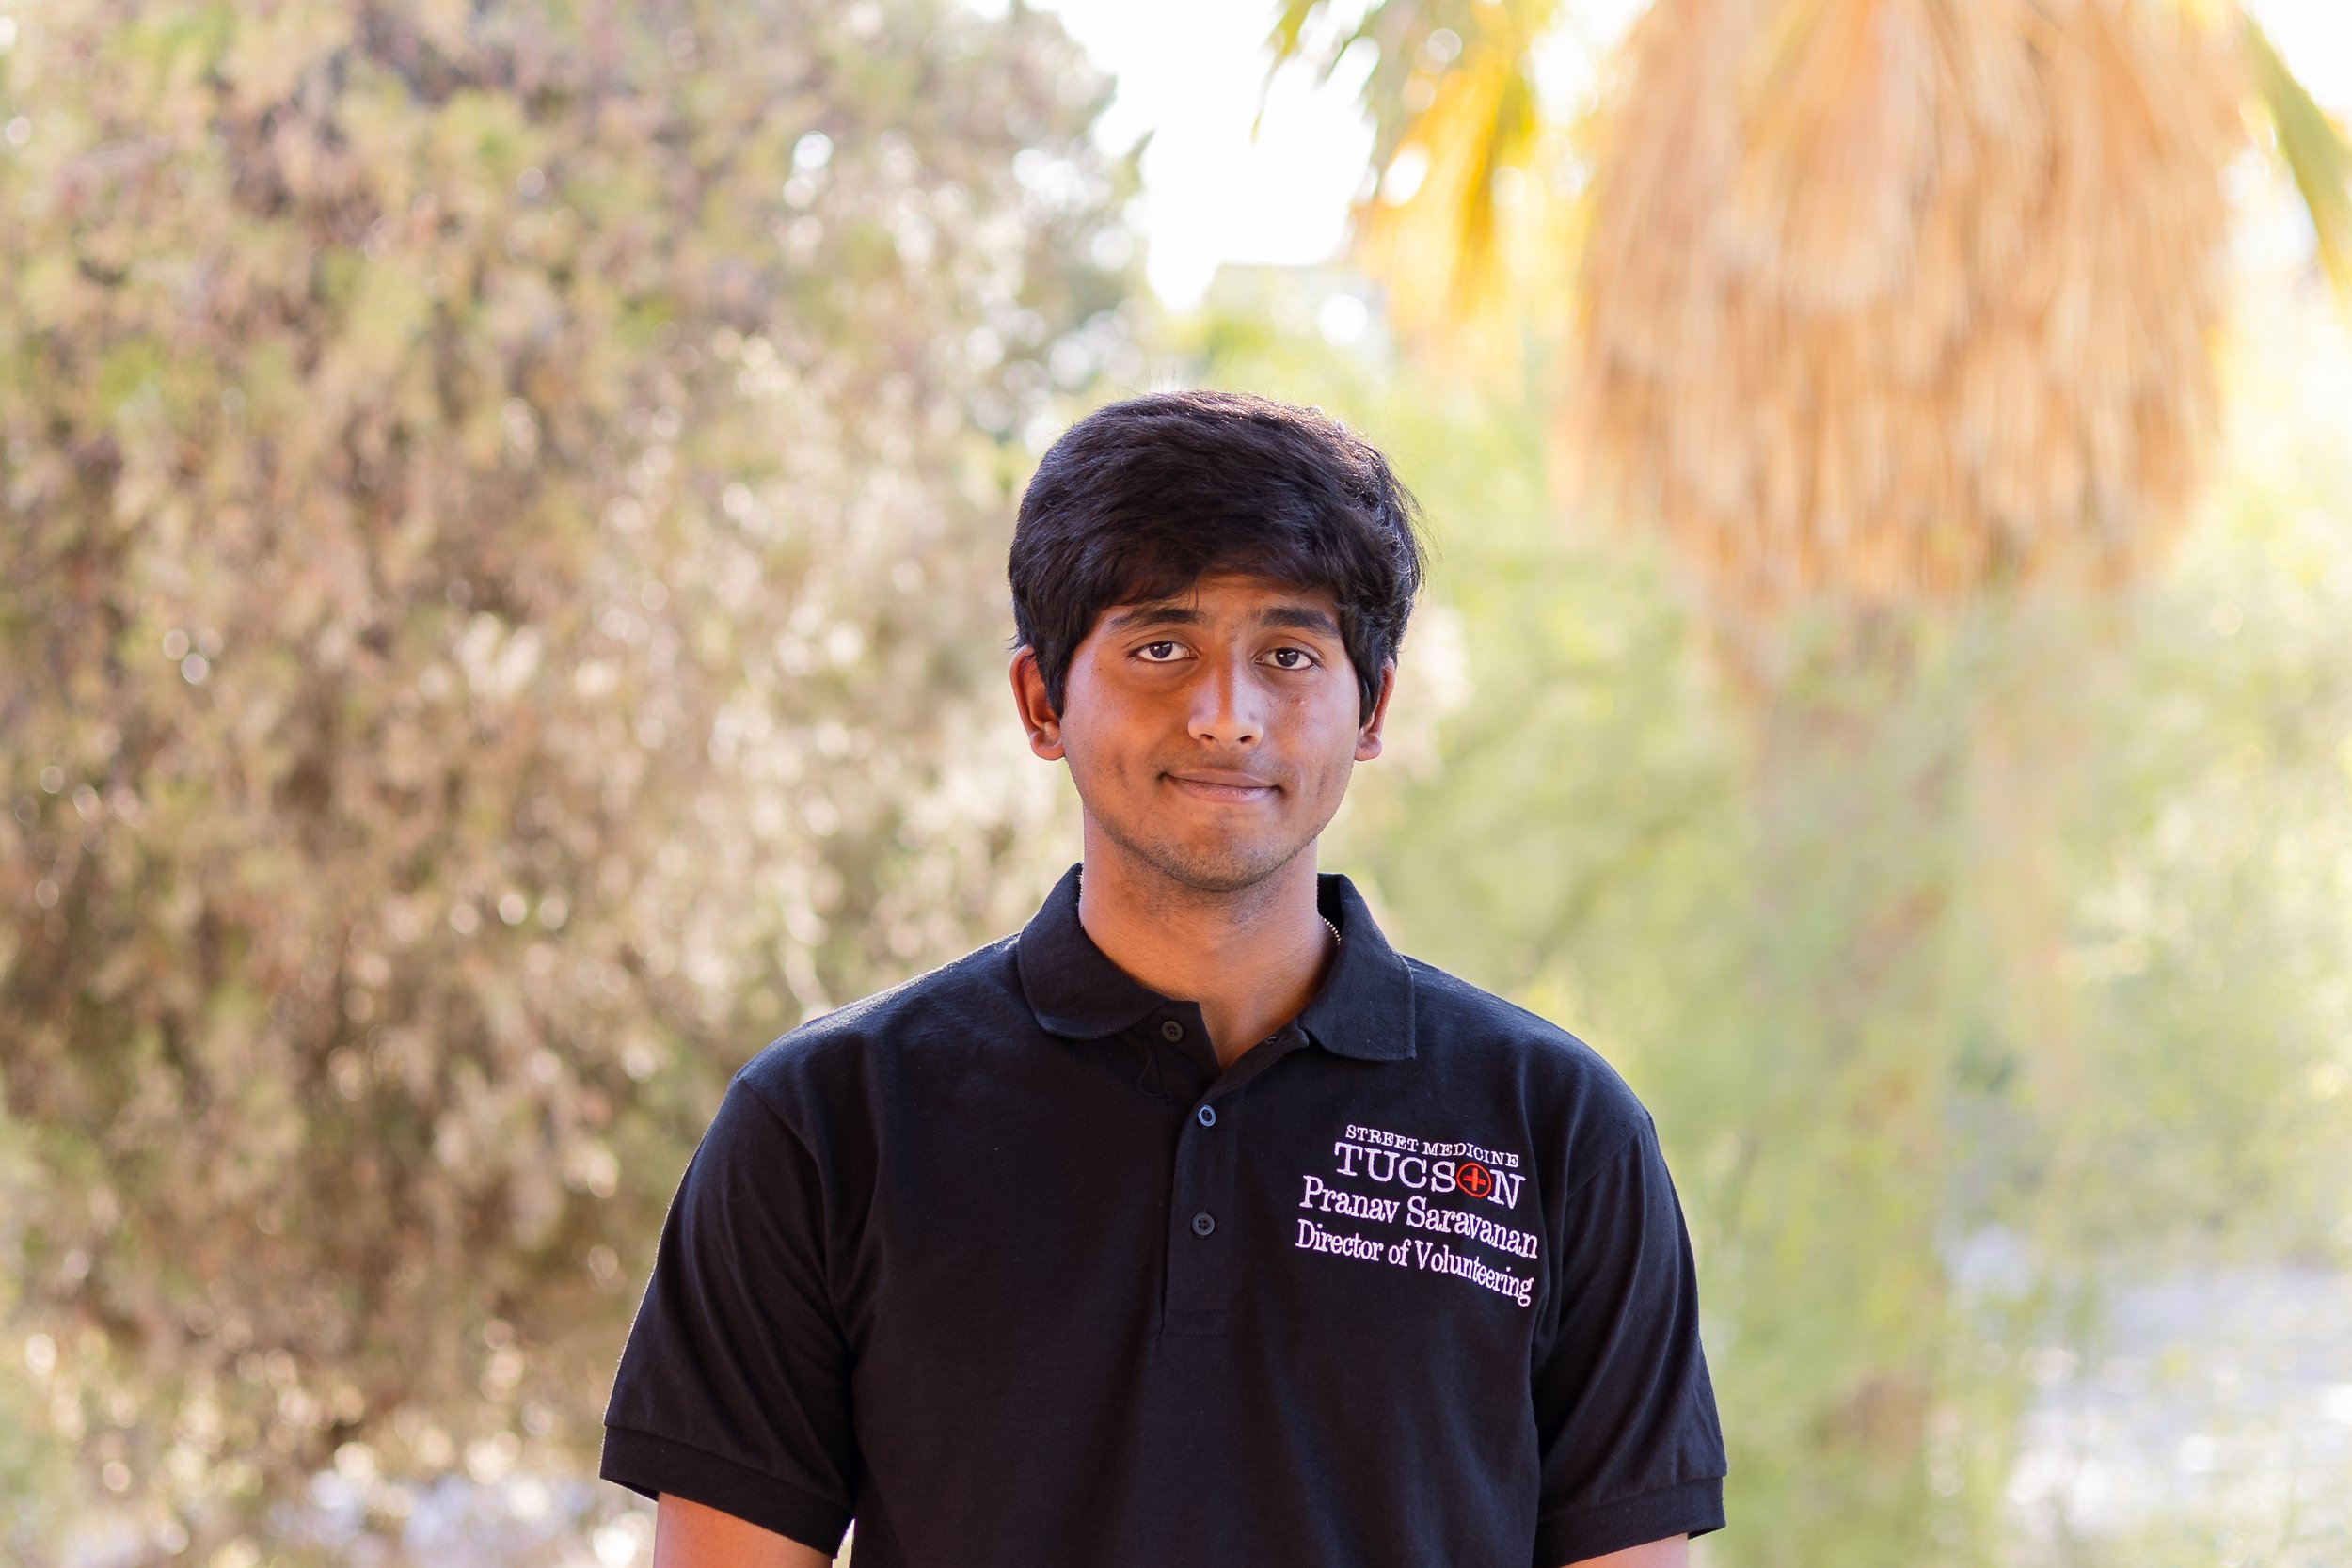 Director of Volunteering: Pranav Saravanan